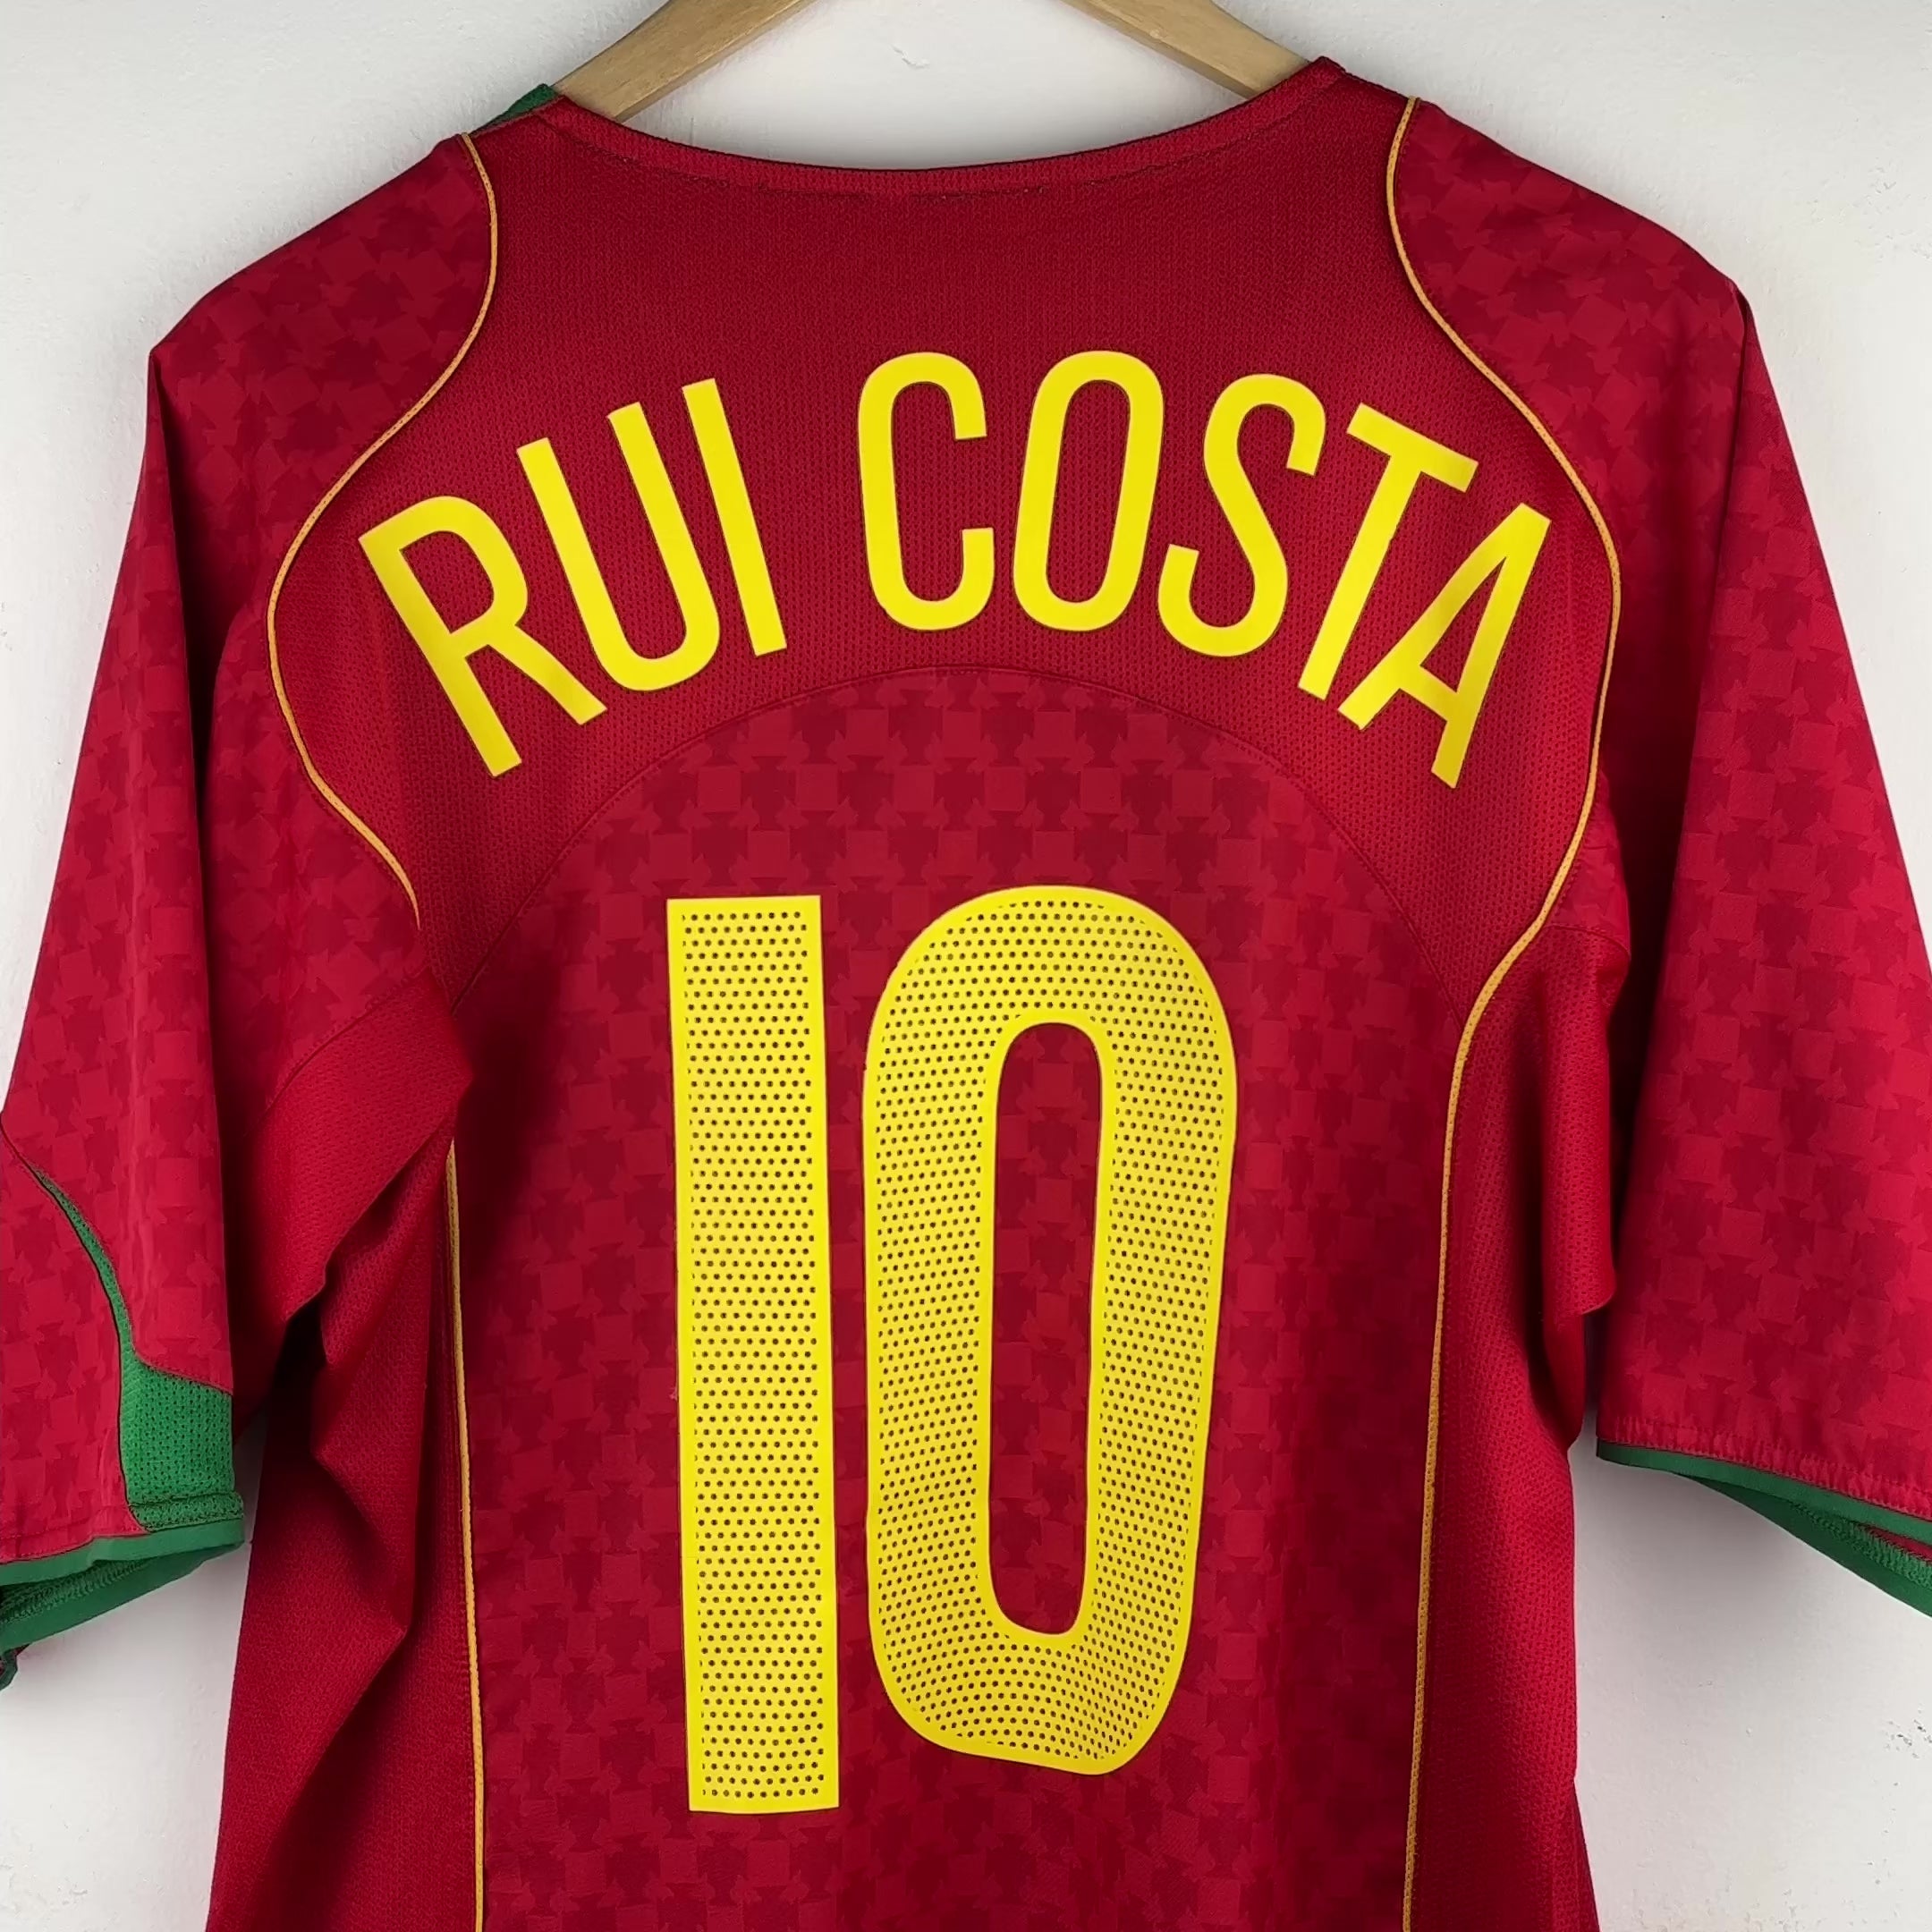 Rui Costa Portugal classic jersey